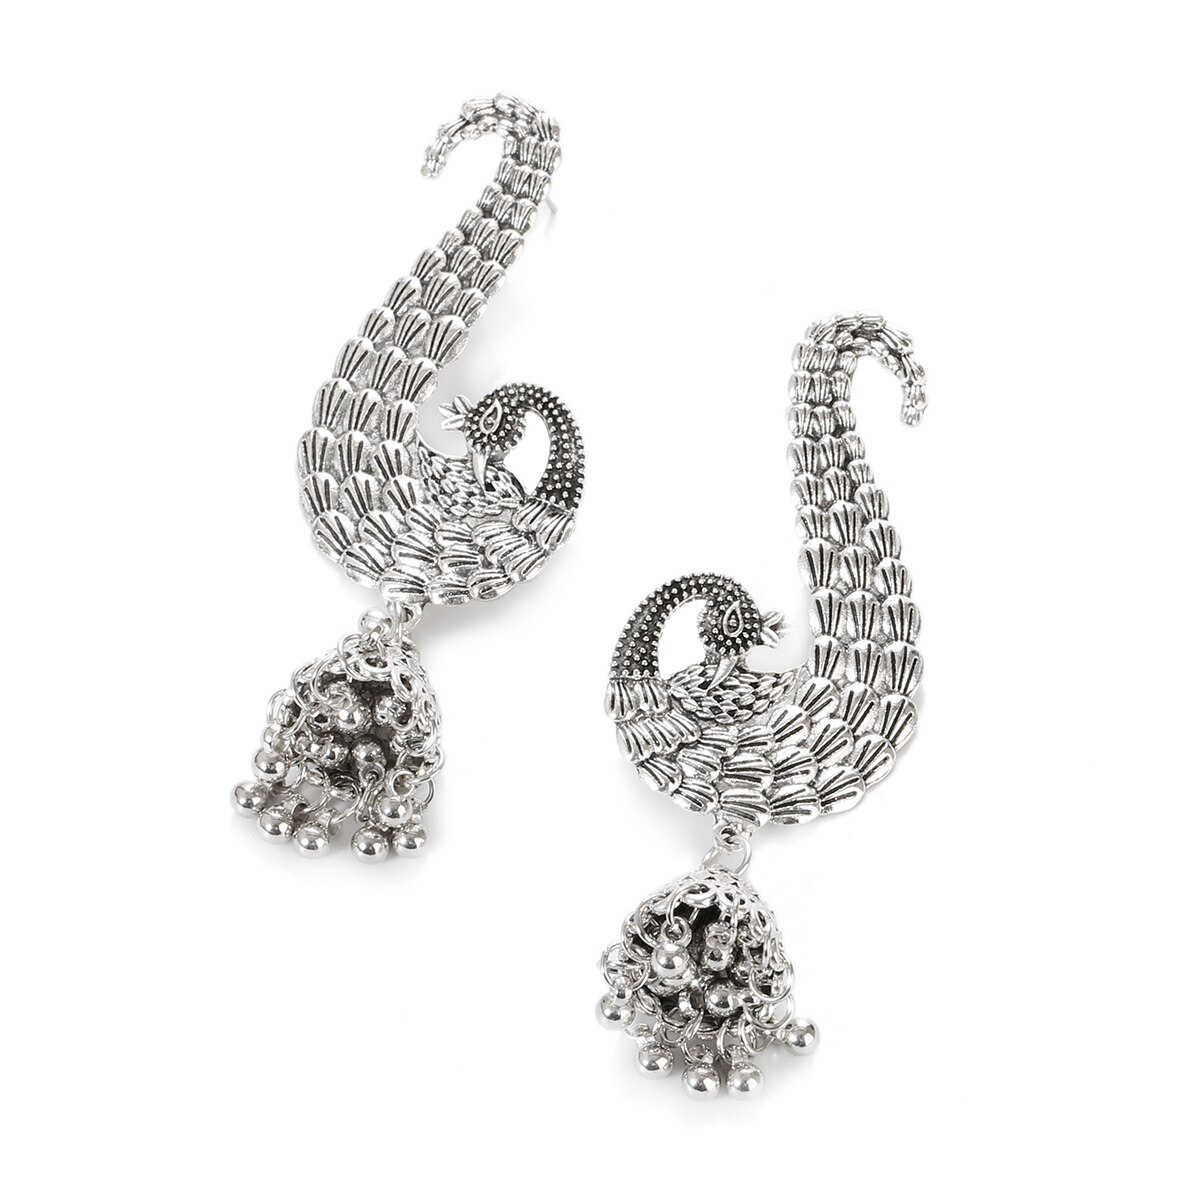 Retro-Luxury-Peacock-Indian-Earrings-For-Women-Ethnic-Gold-Color-Earrings-Piercing-Wedding-Jewelry-A-1005004007674459-4